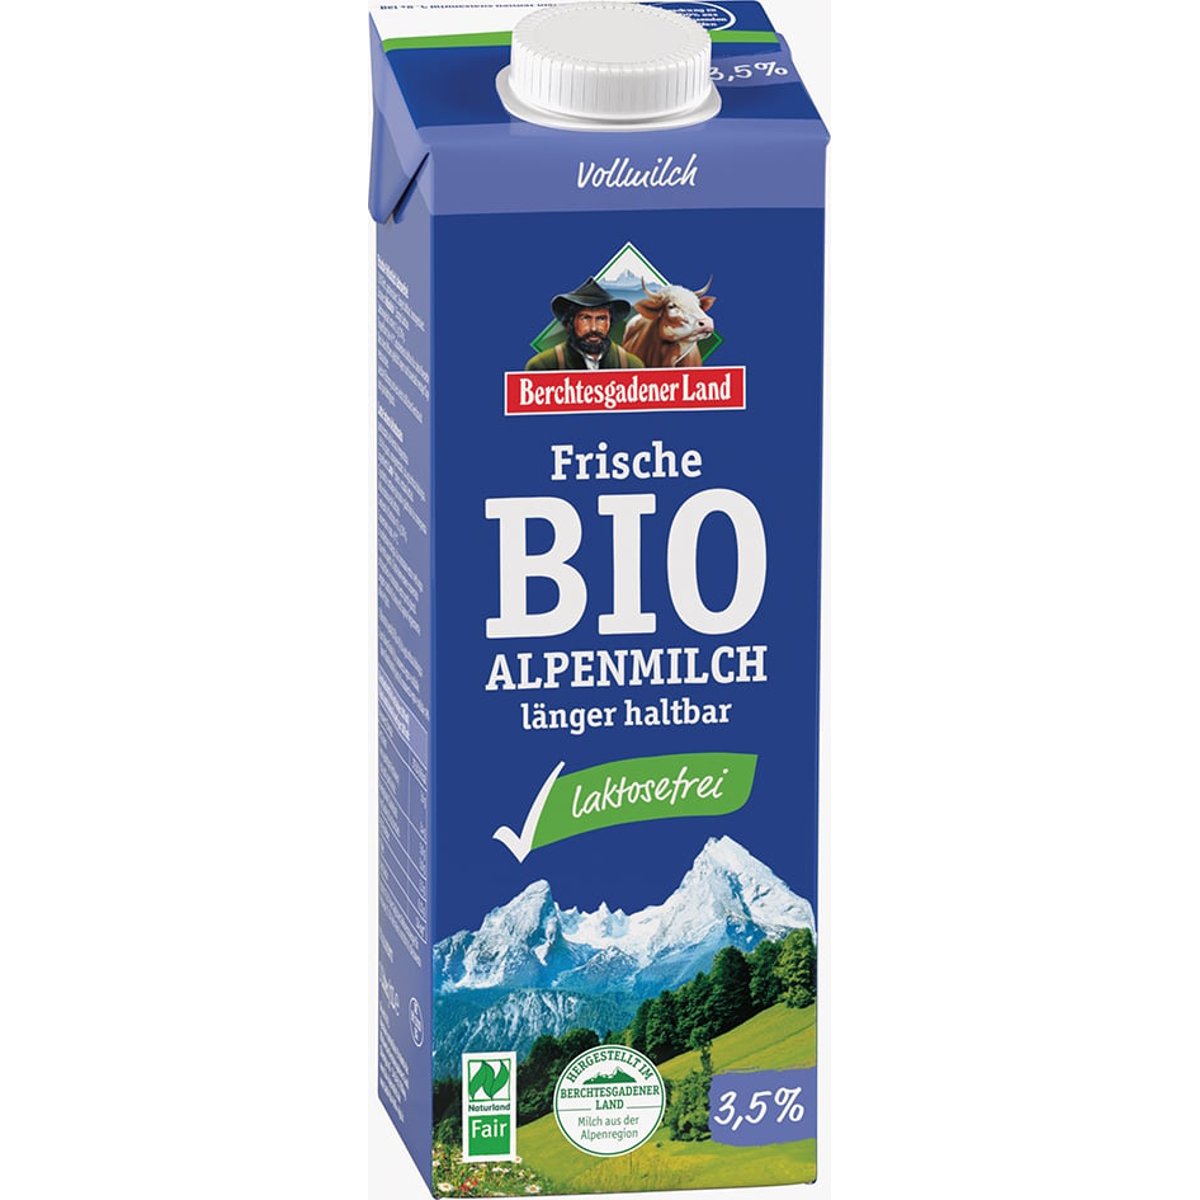 Berchtesgadener Land BIO Čerstvé alpské mléko bez laktózy plnotučné